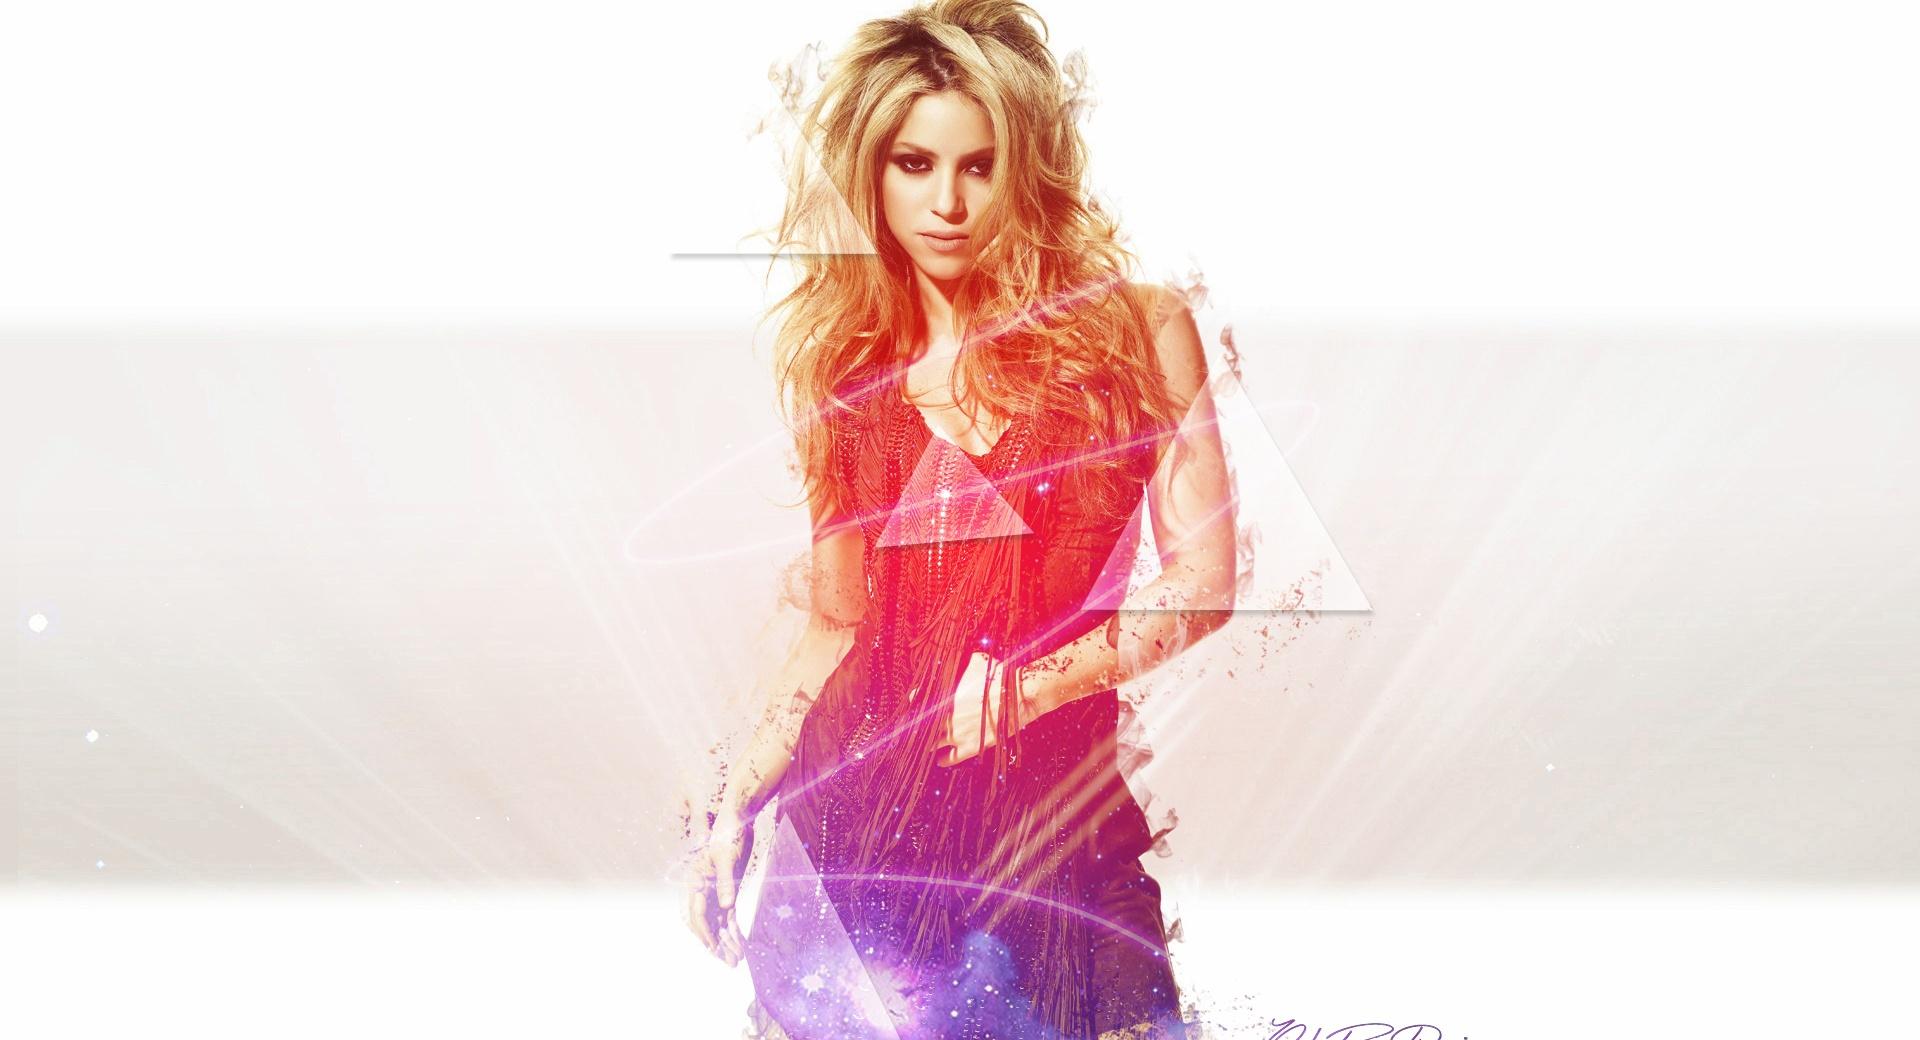 Shakira Light effects at 1024 x 1024 iPad size wallpapers HD quality